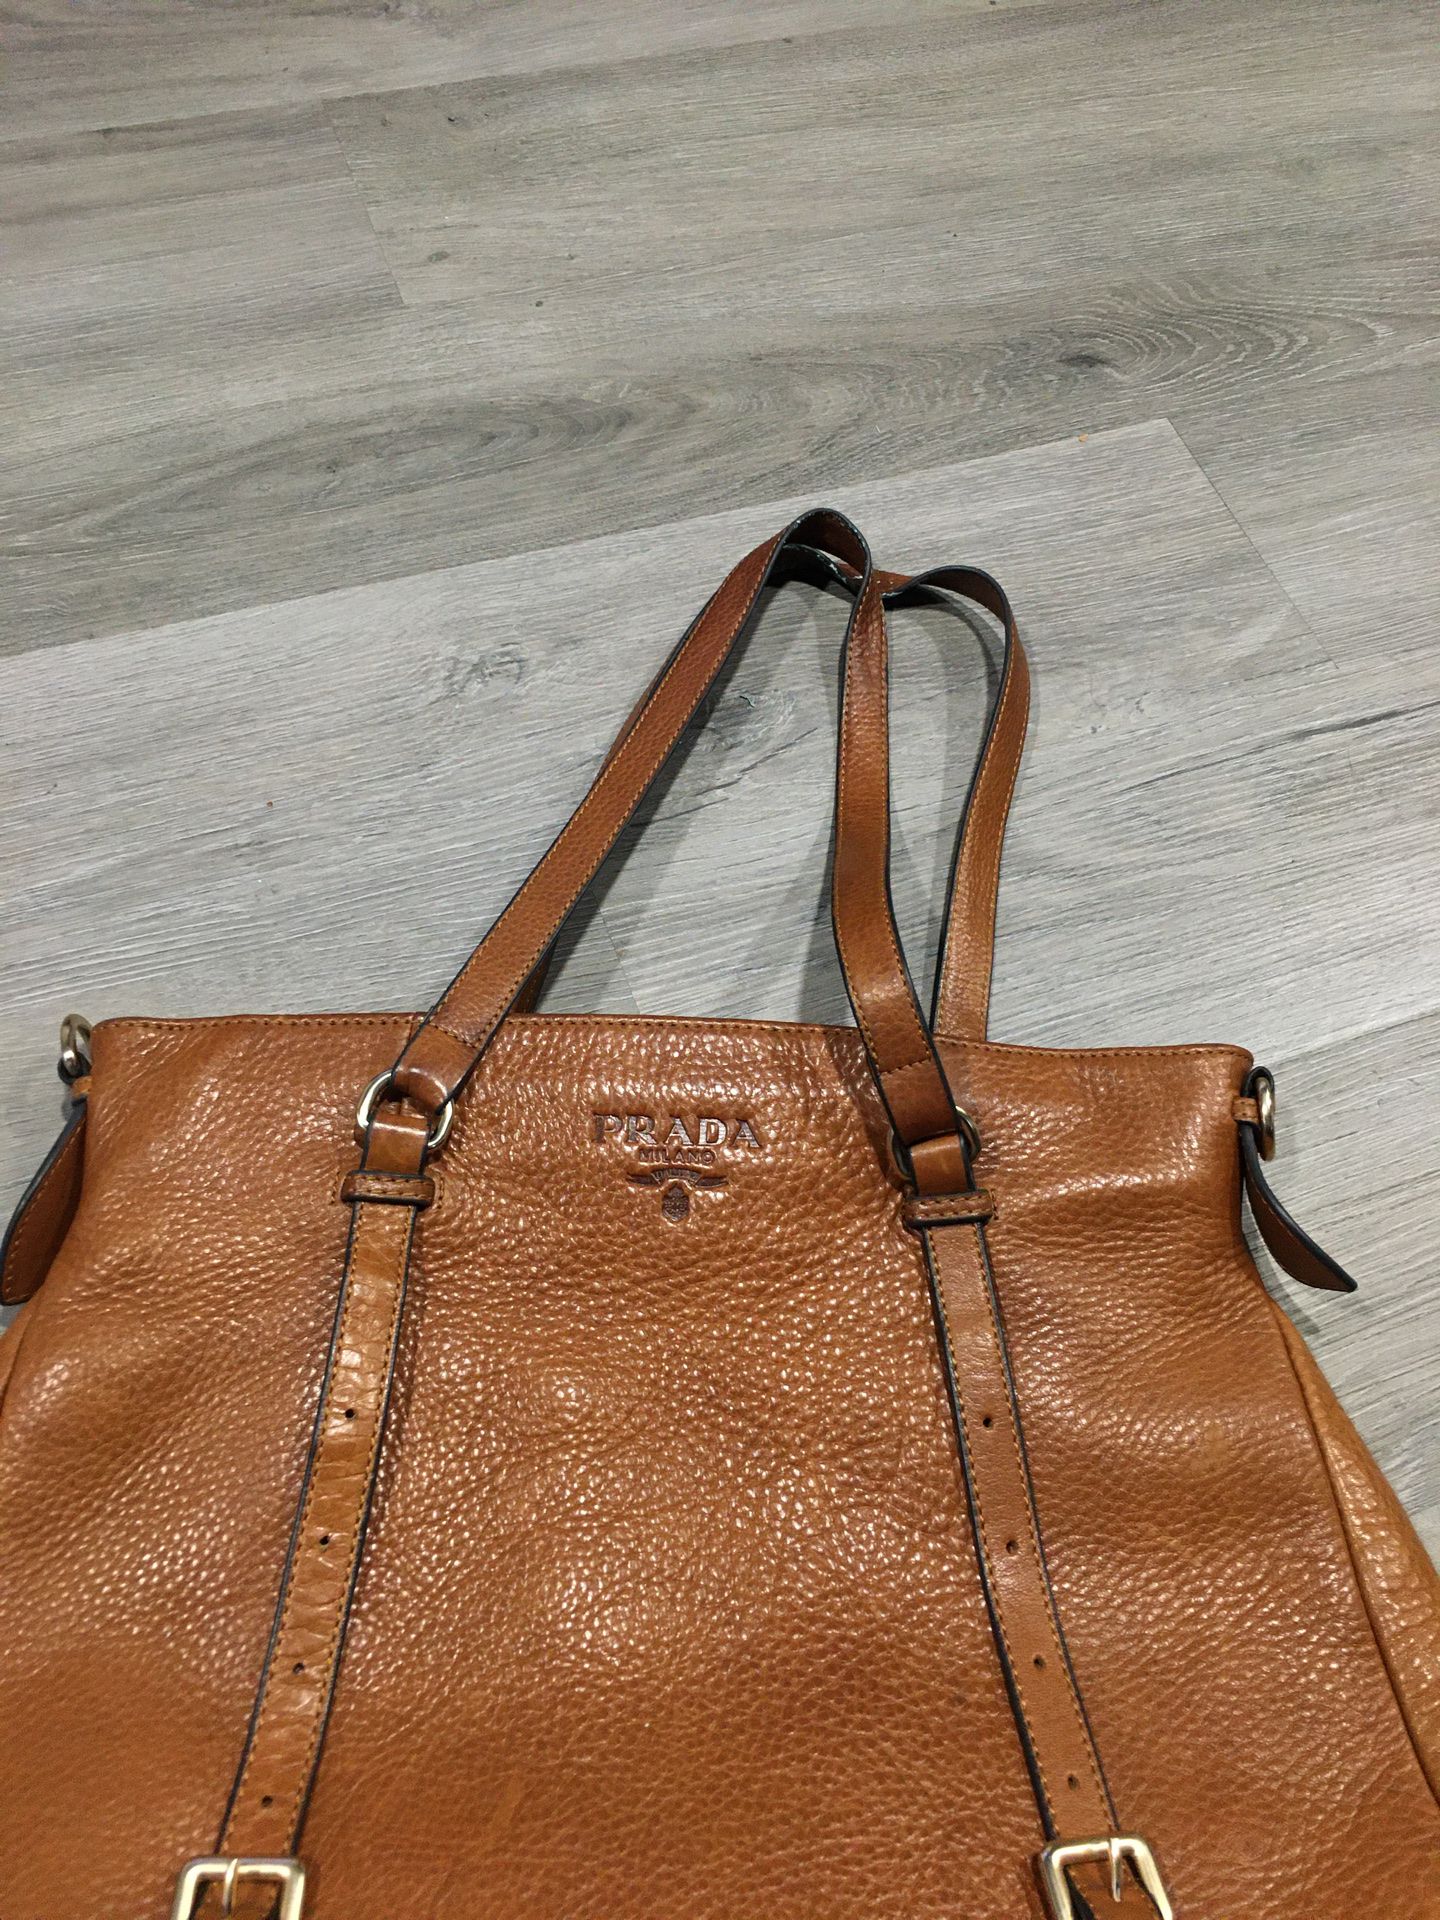 Leather purse Real Prada bag $500